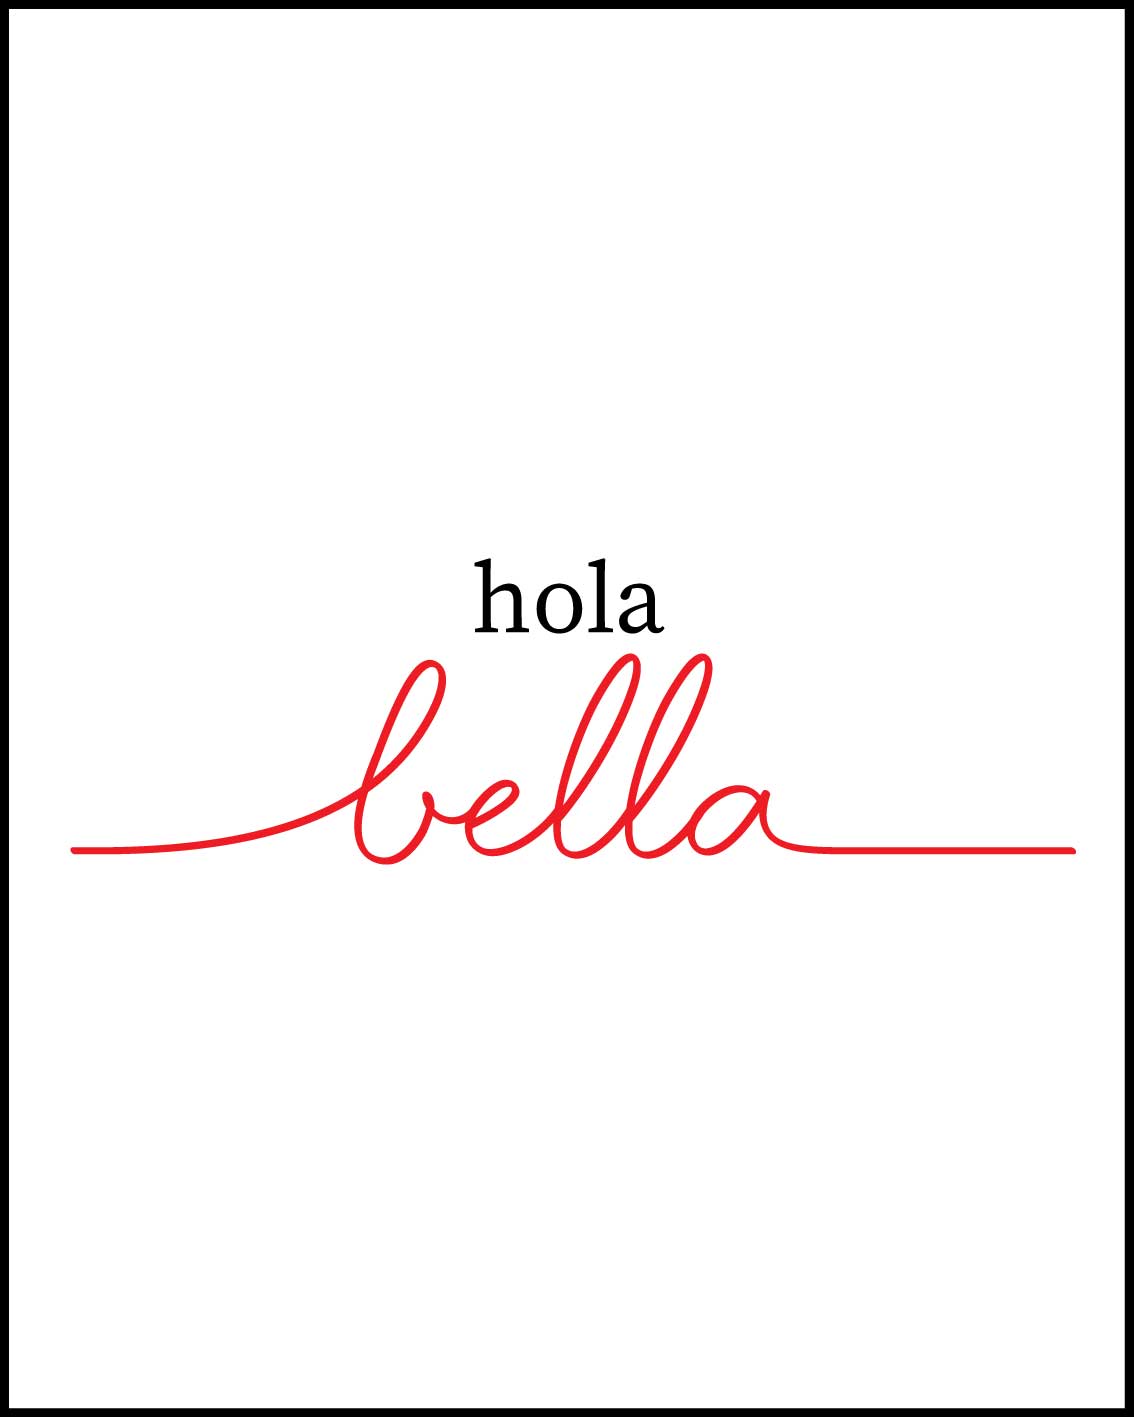 Hello Beautiful in Spanish Poster